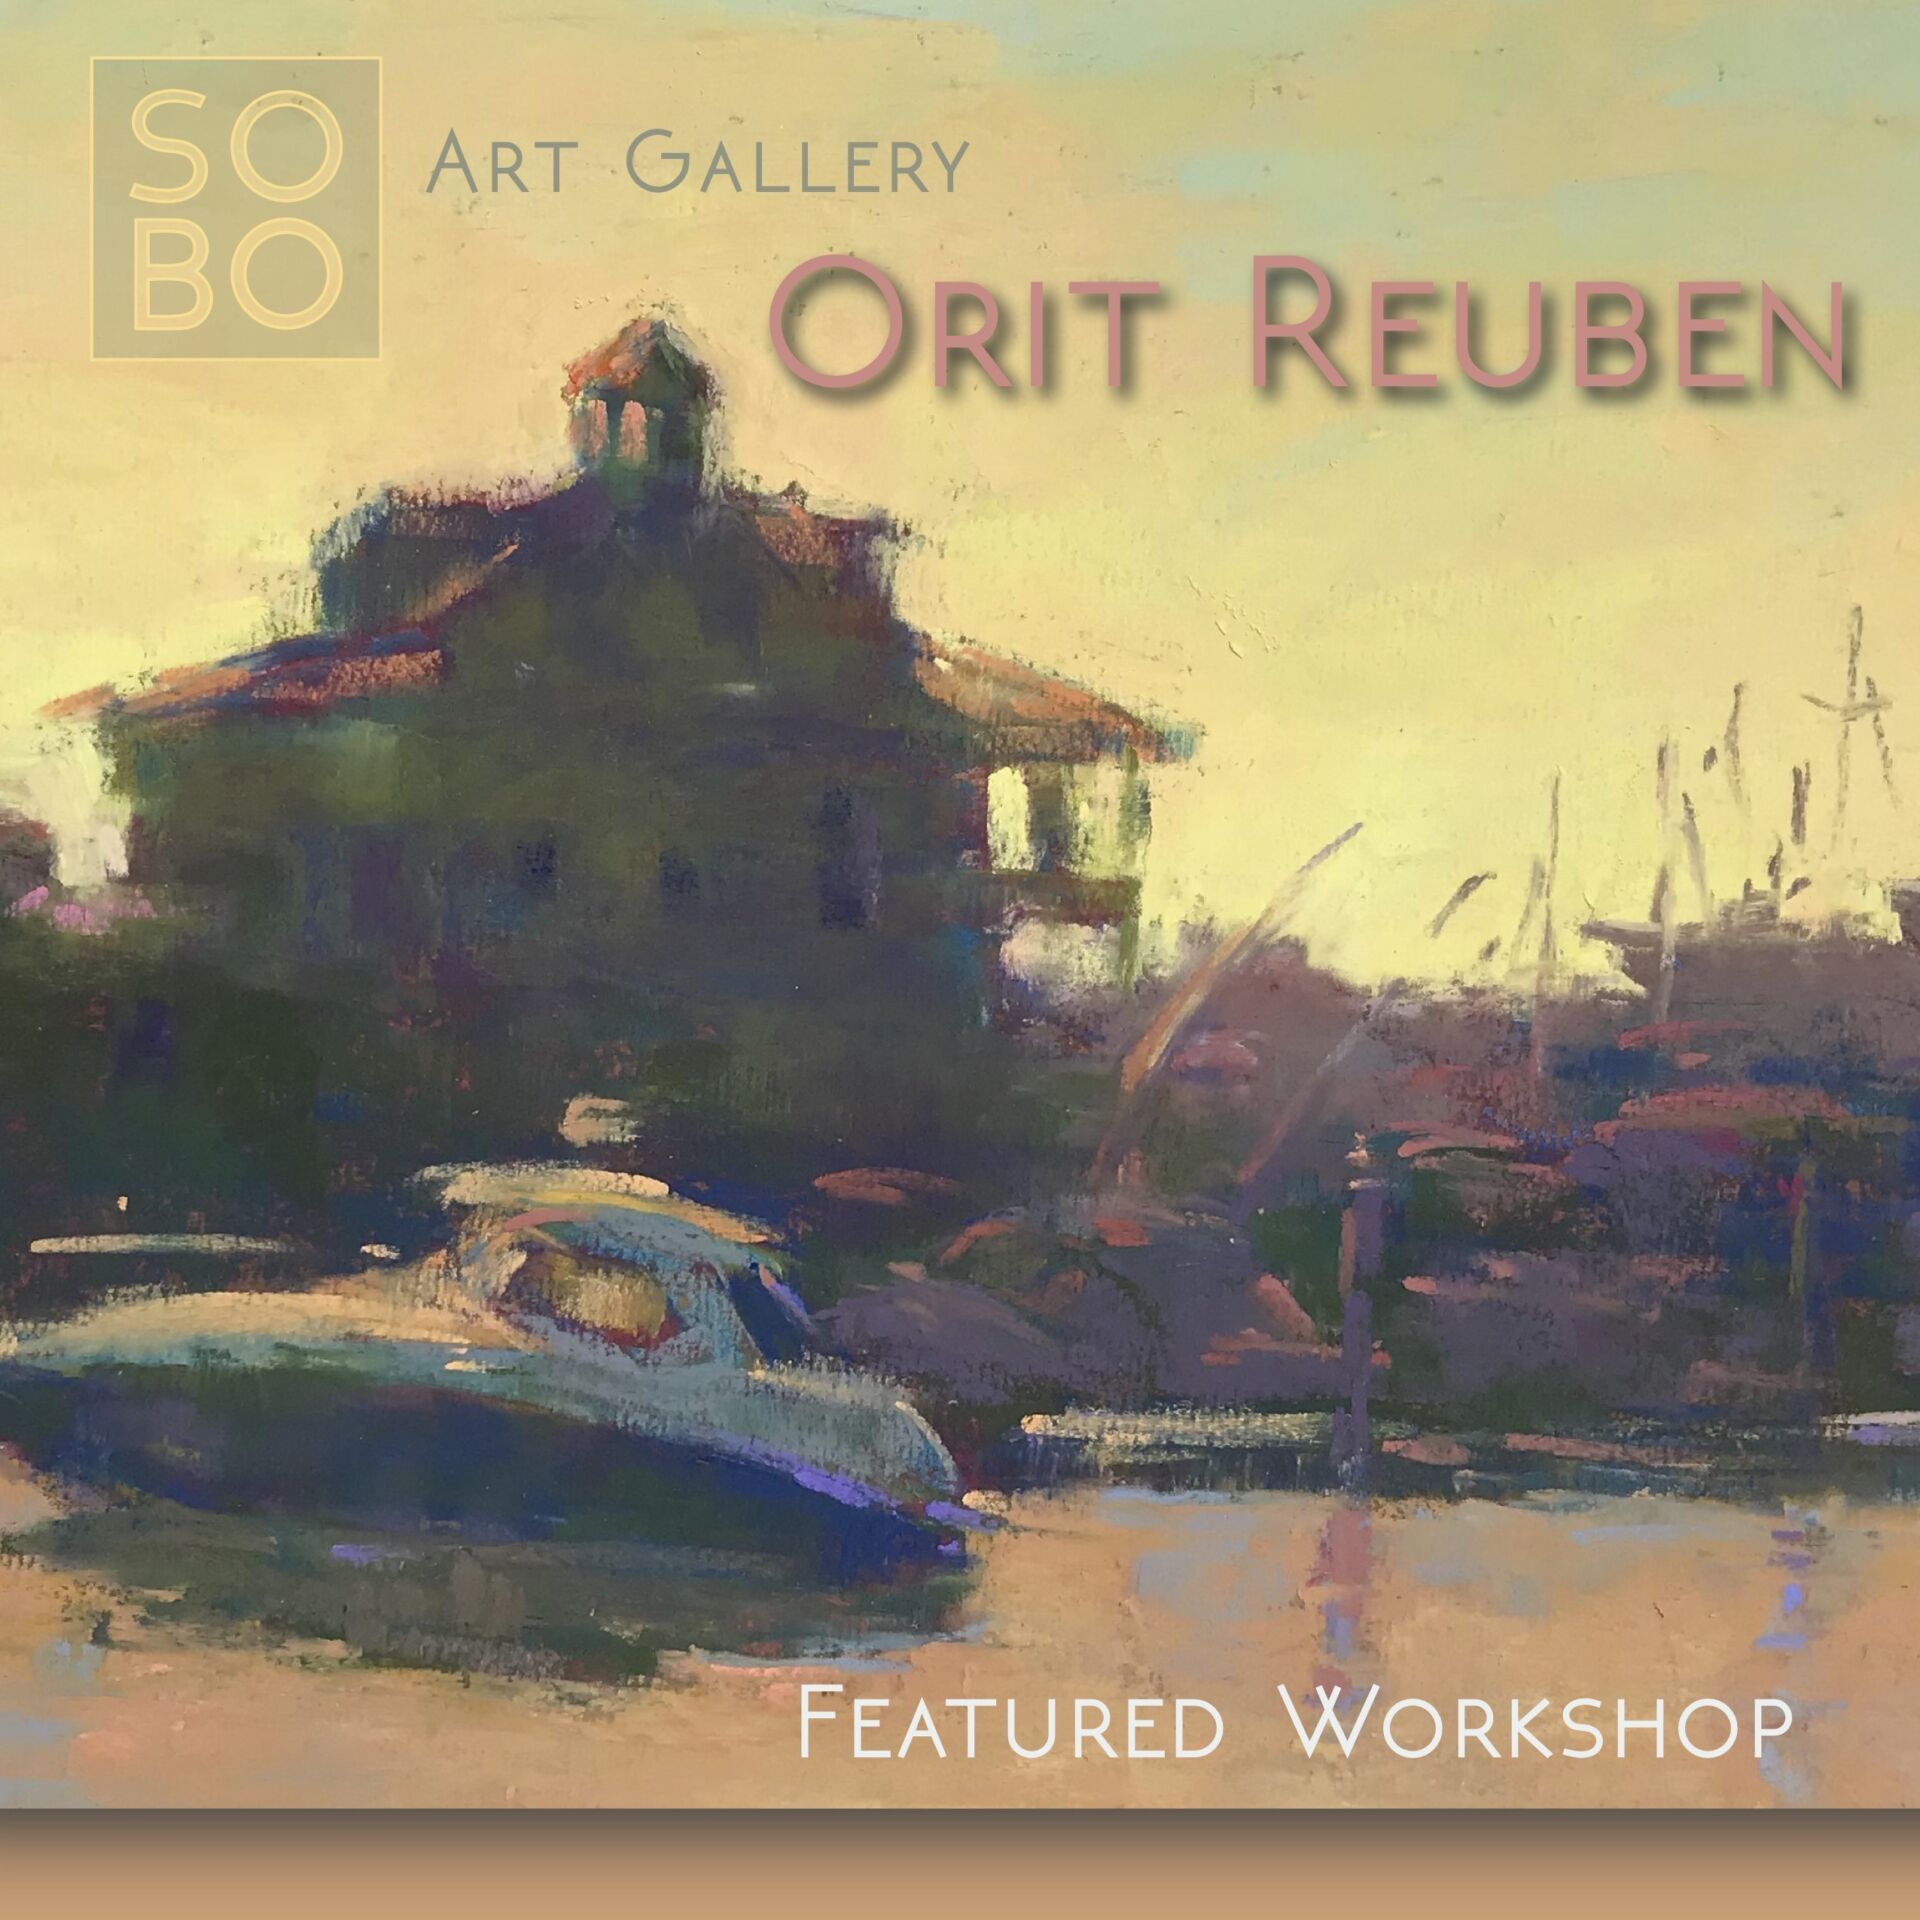 Orit Reuben | Winter Garden Art Association, SOBO Gallery